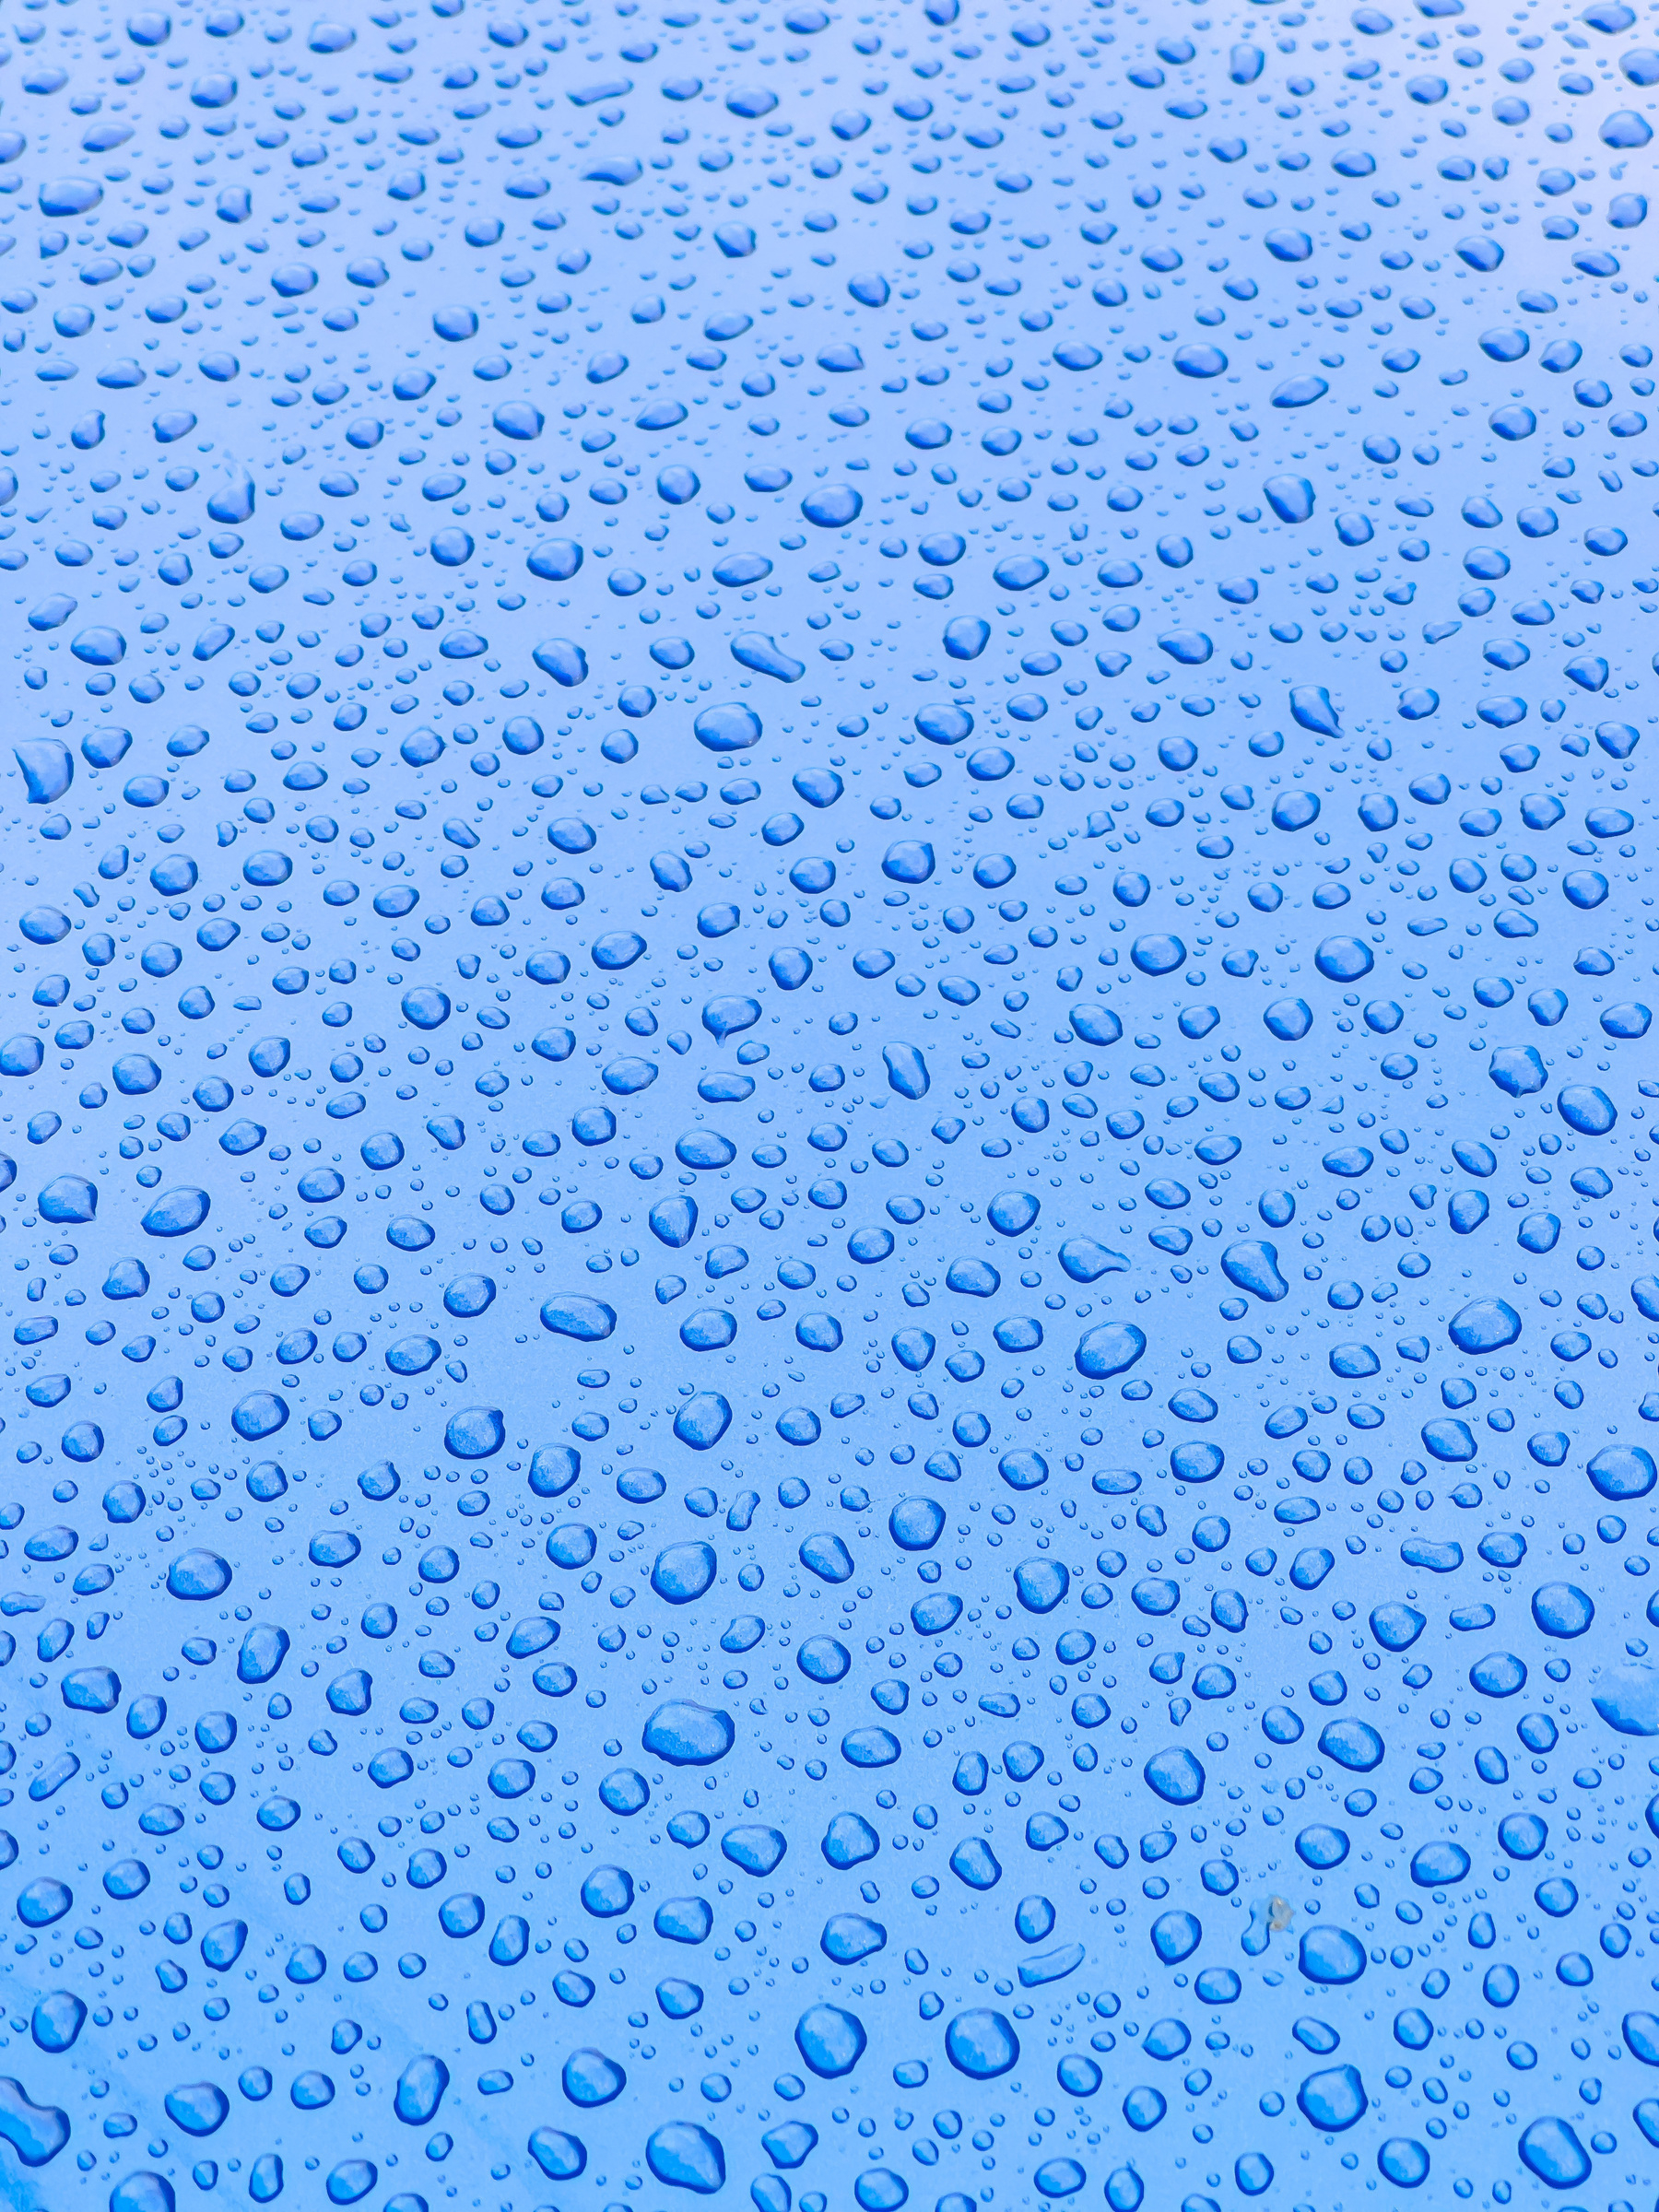 Water drops on blue car hood.